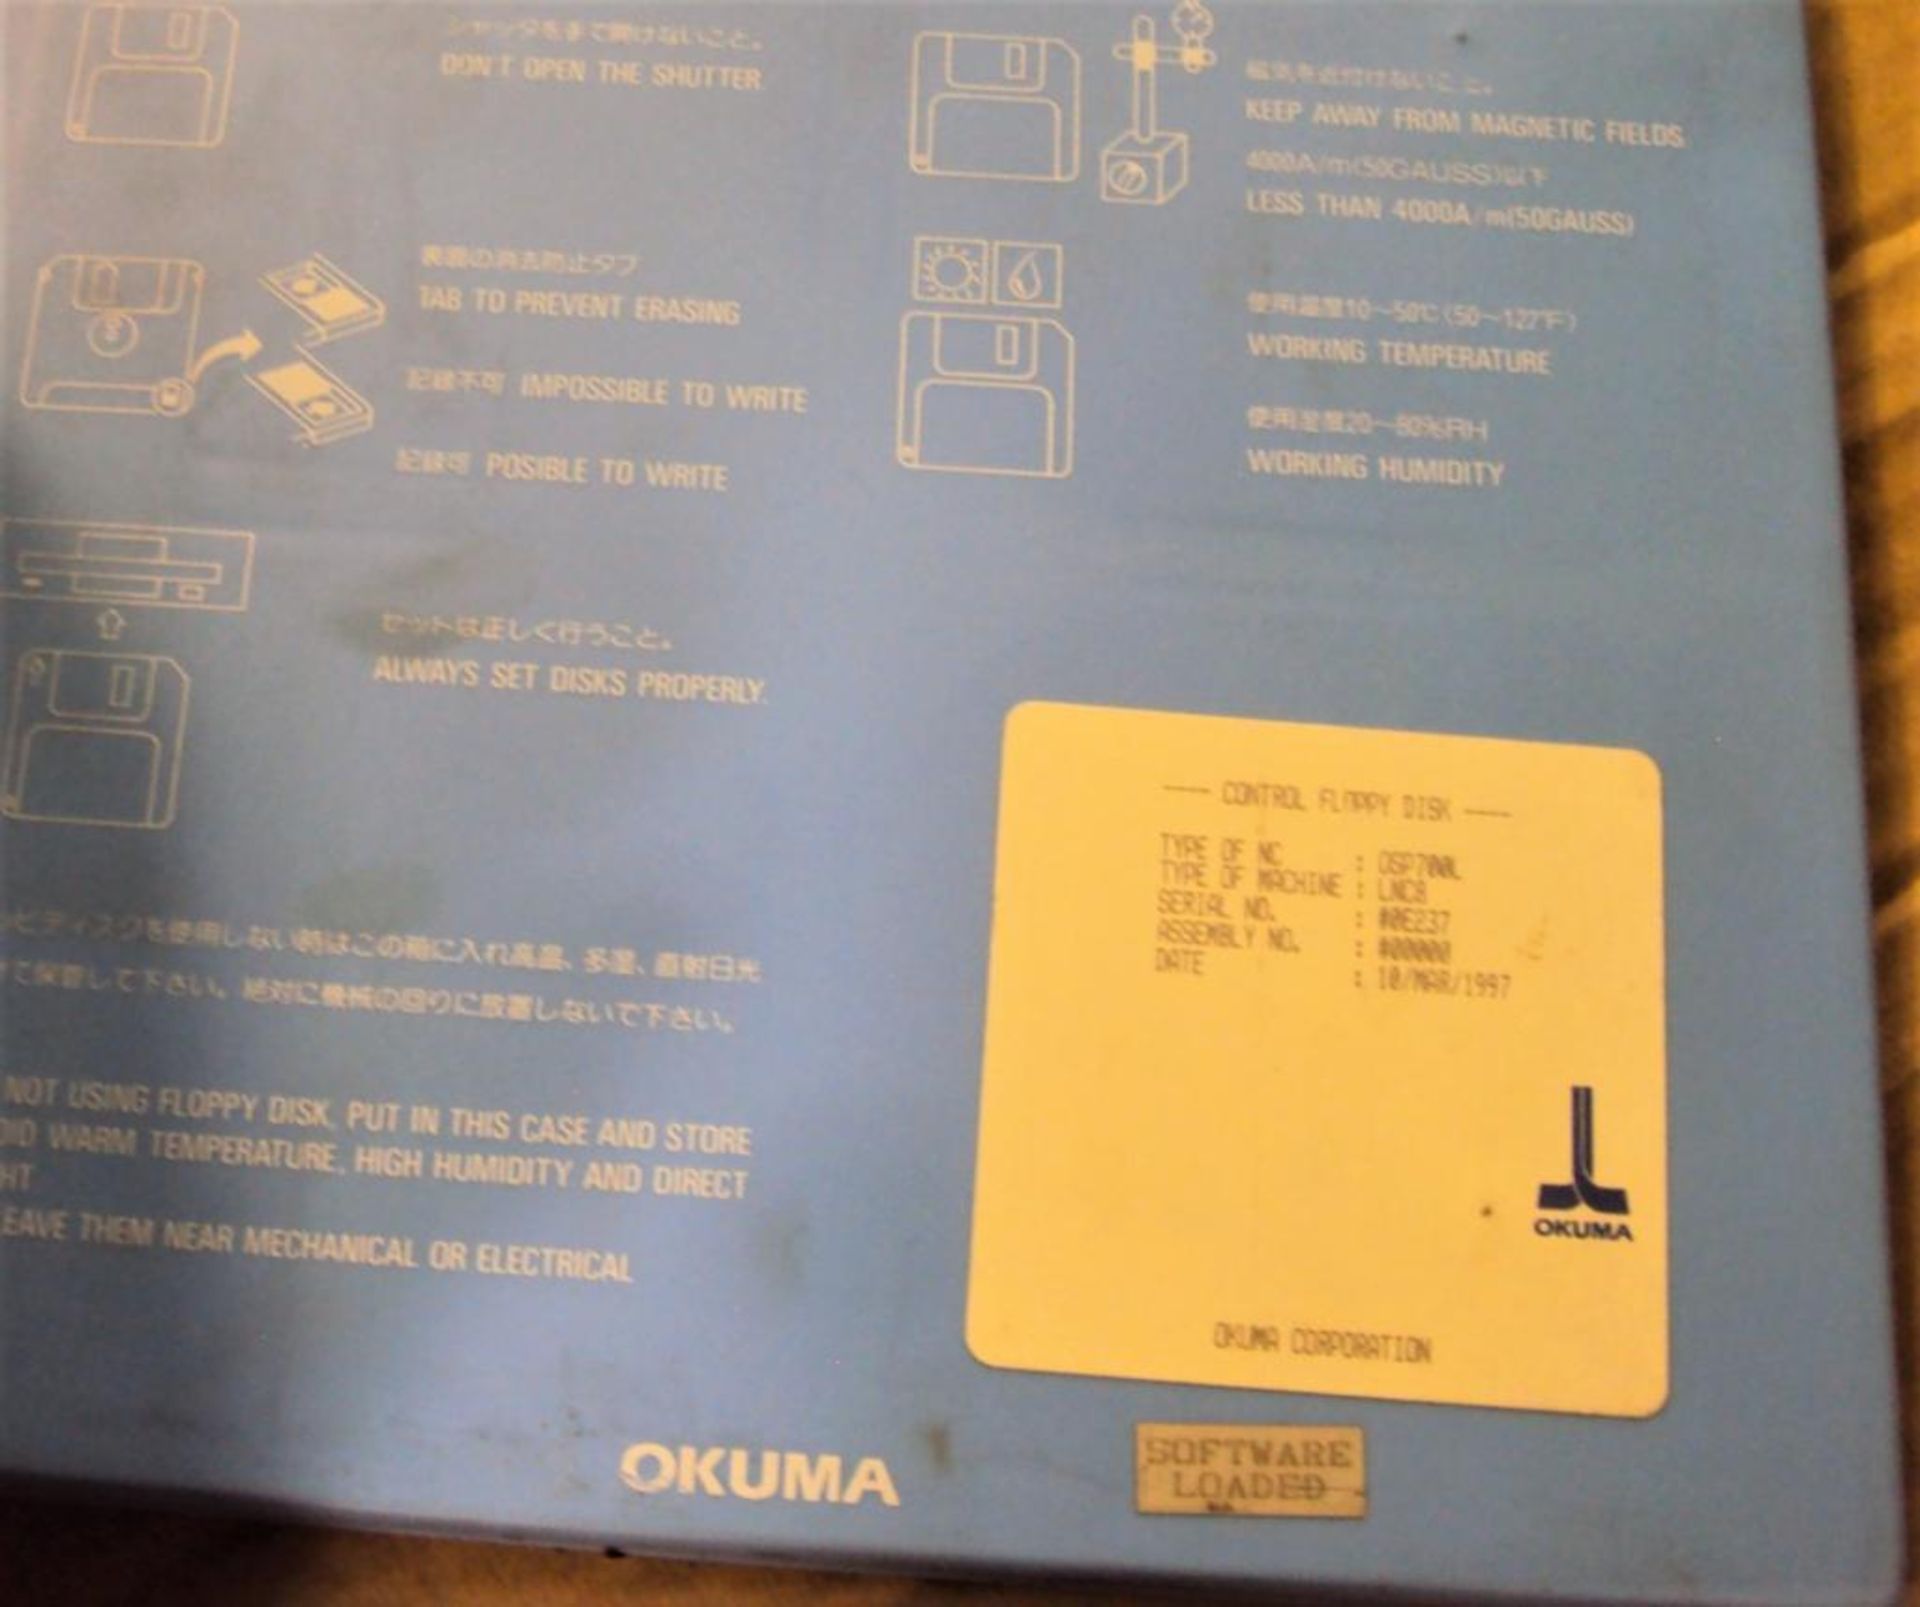 Okuma OPUS7000 E0451-521-094 & E7191-855-018-2 CPU IF/Rack w/ Modules - Image 5 of 6